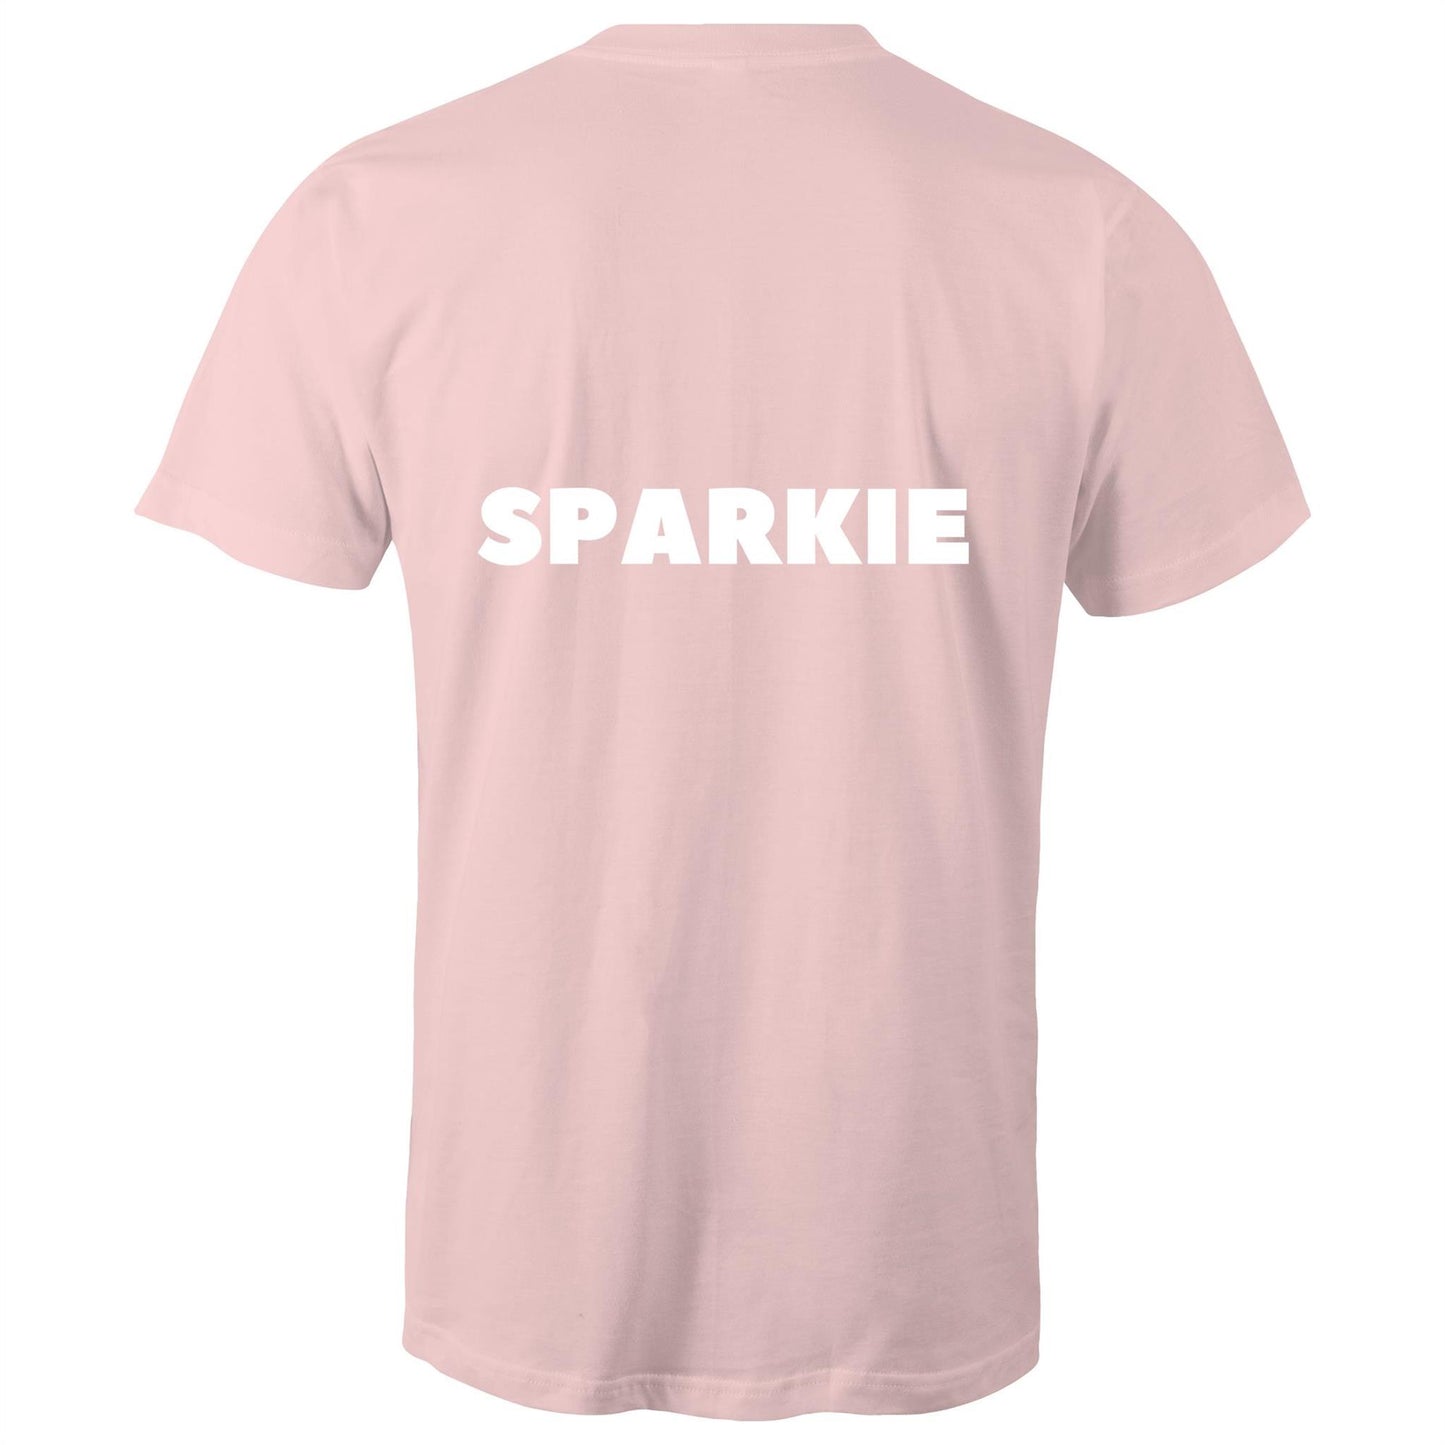 SPARKIE - Unisex T-Shirt